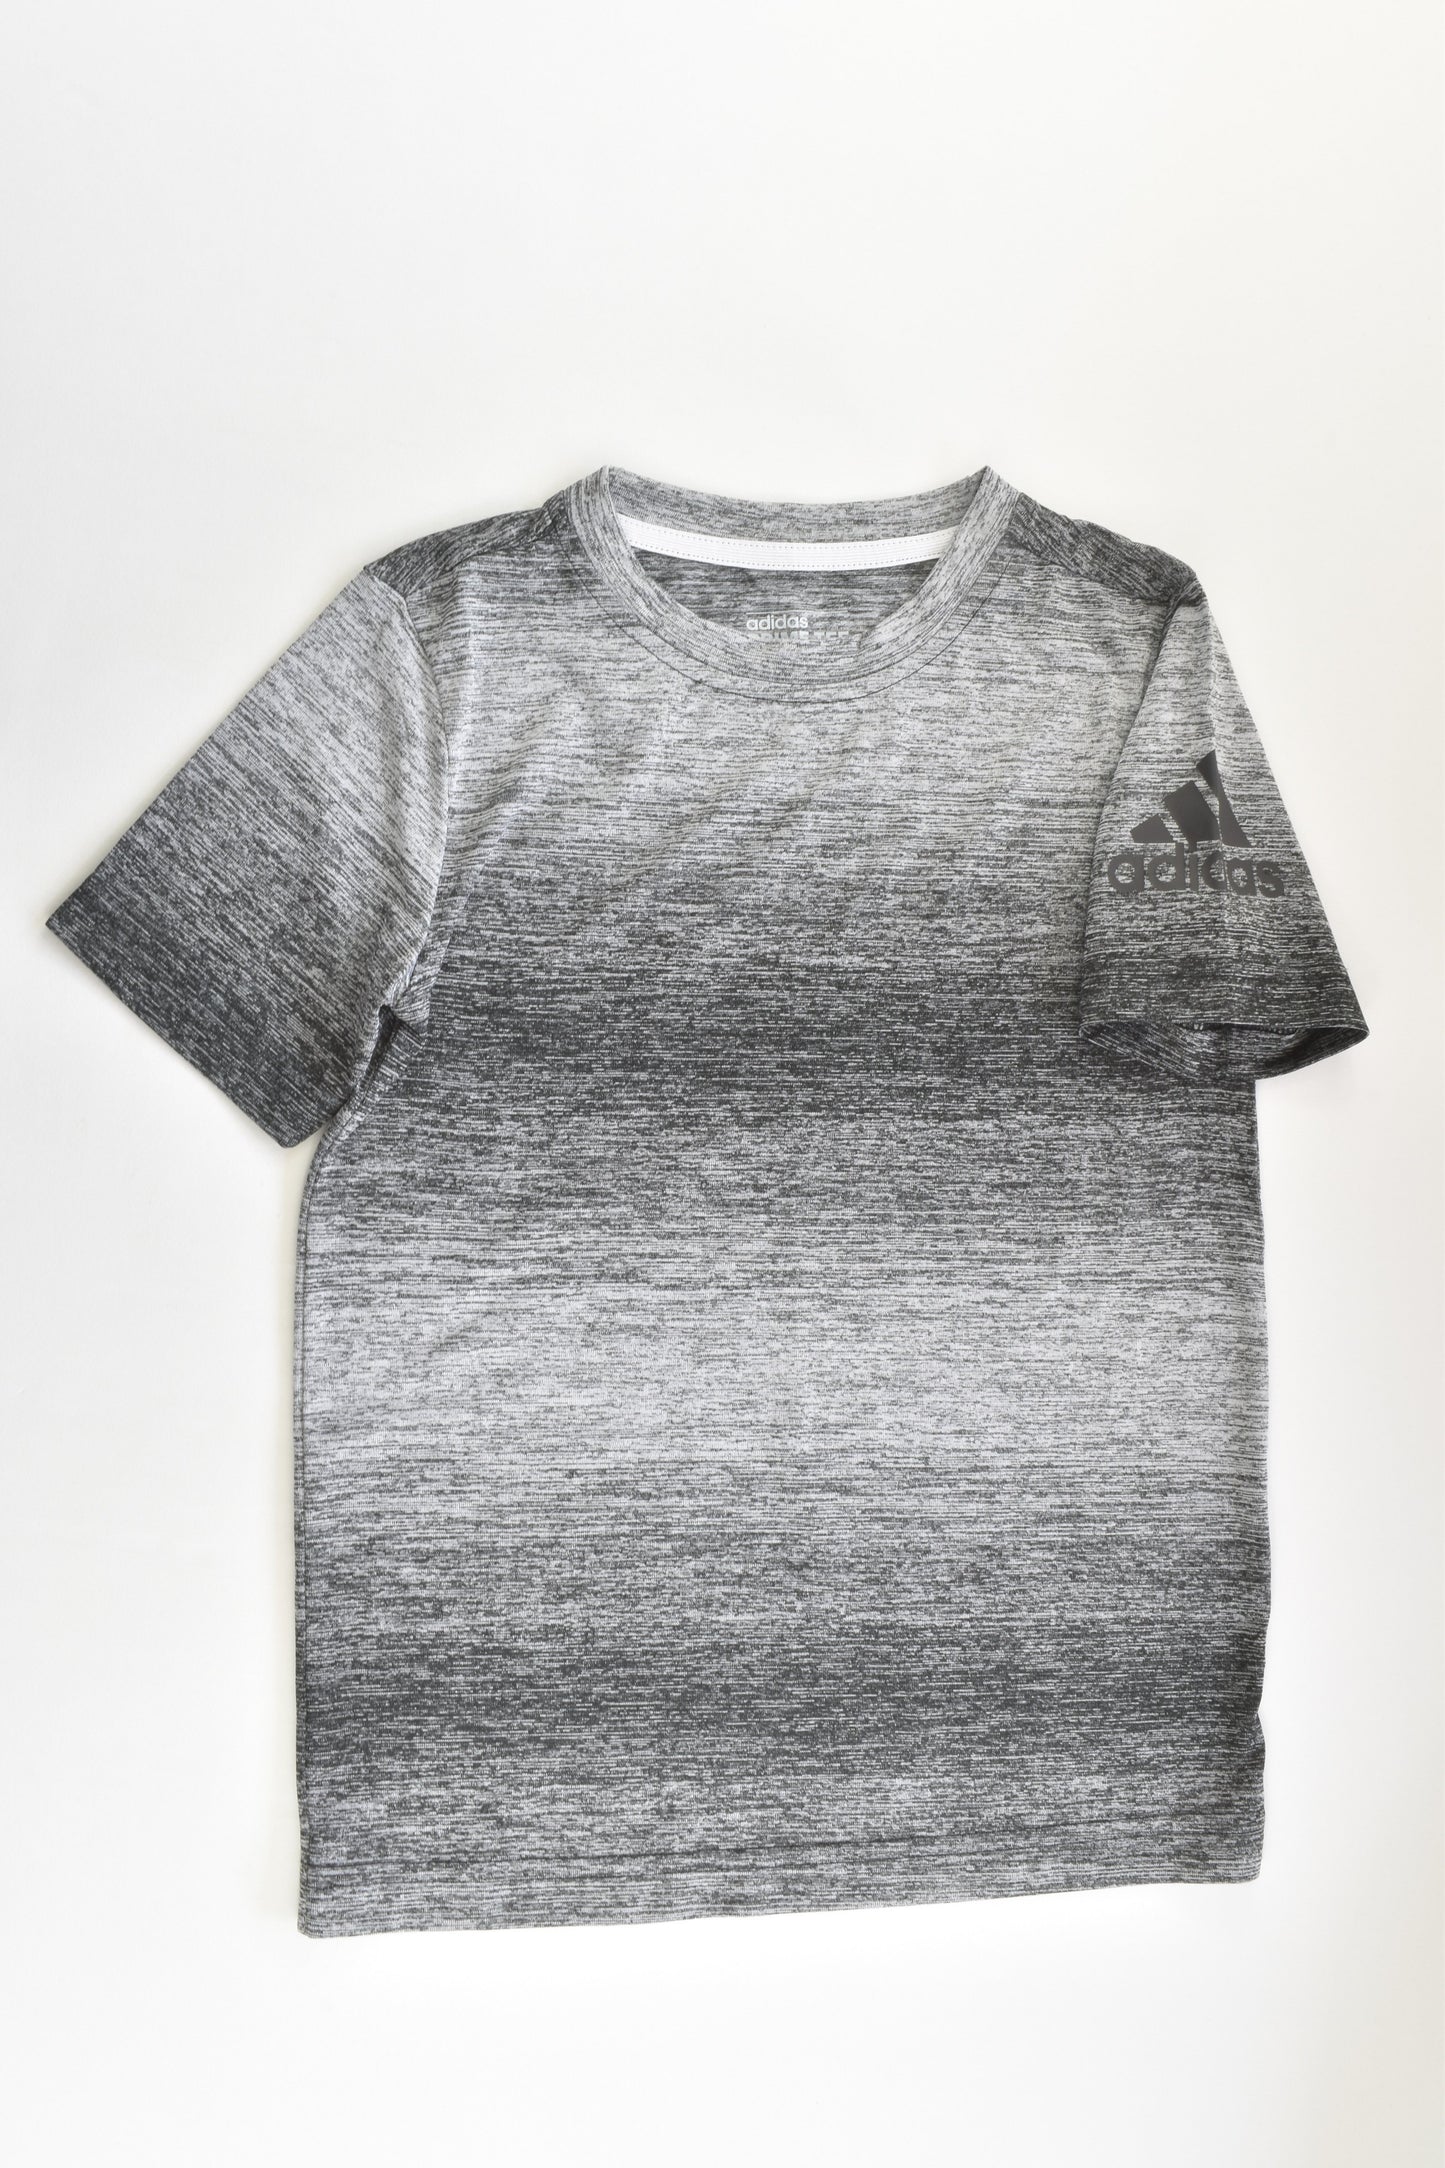 Adidas Size 7-8 Climalite Prime T-shirt